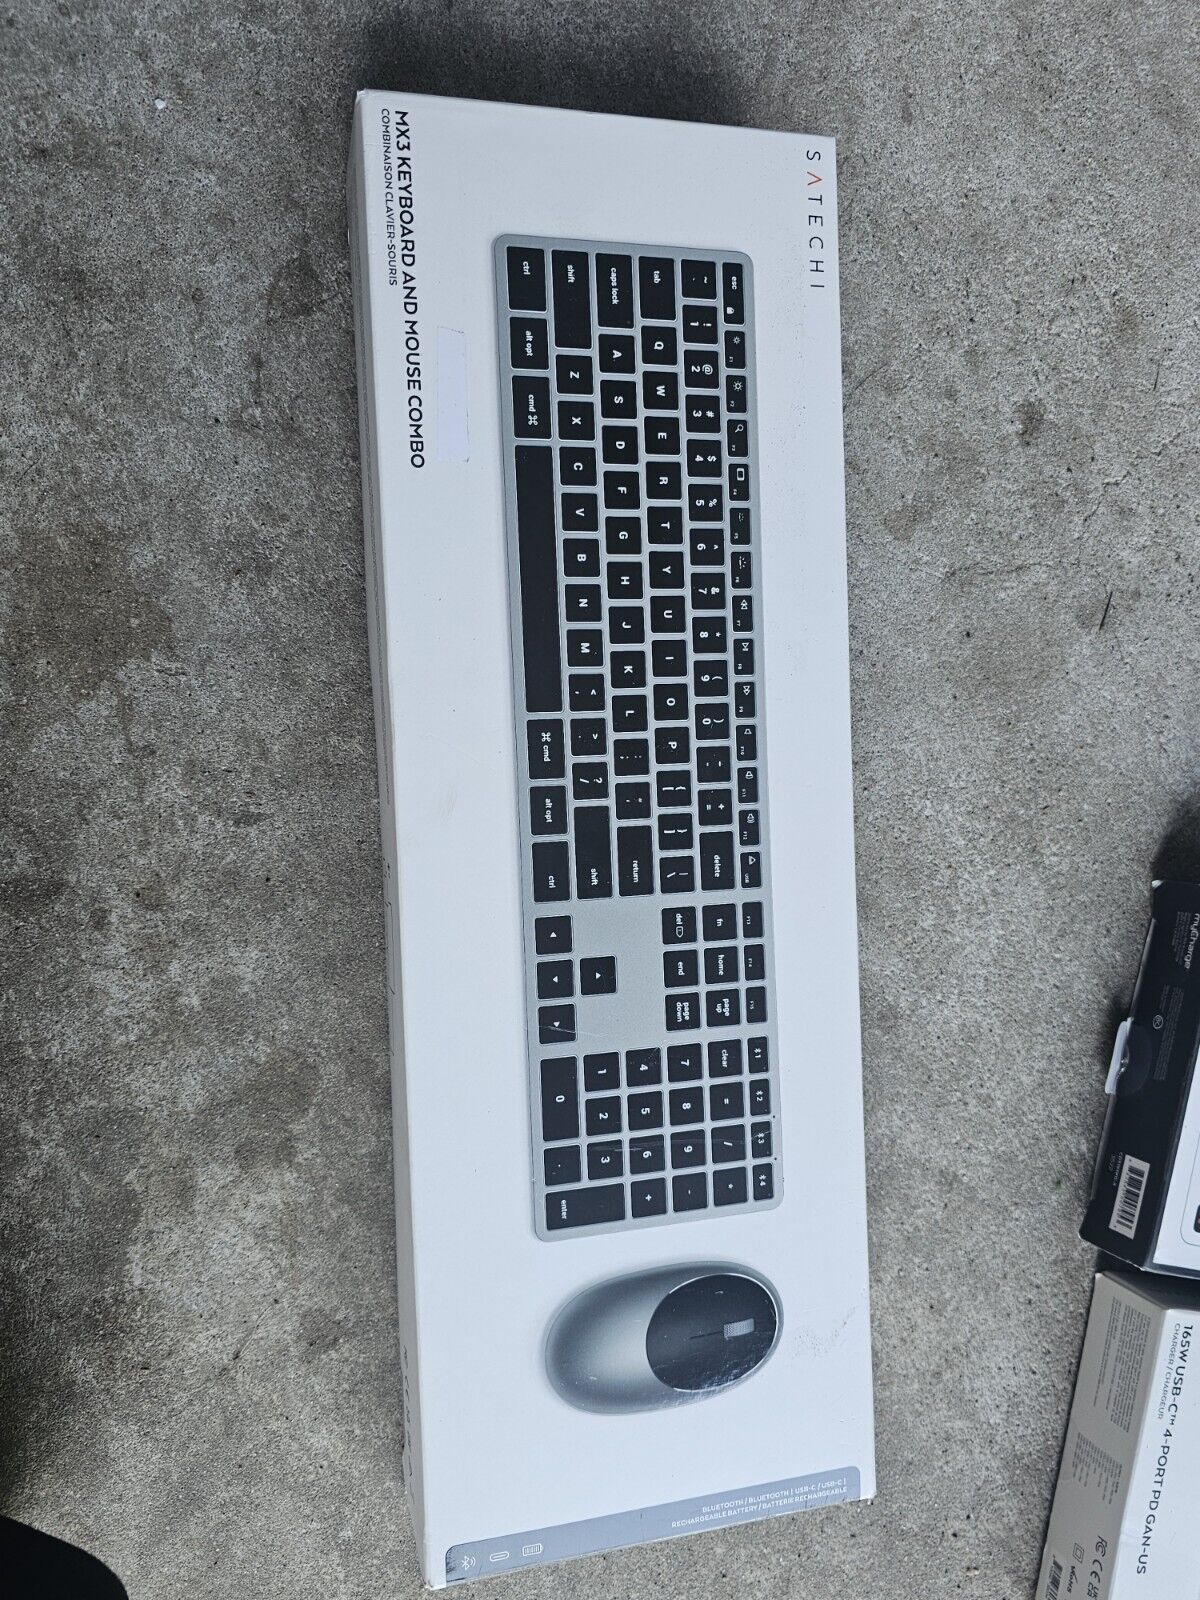 SATECHI MX3 Slim Bluetooth Backlit Keyboard & Mouse Combo w/Numeric Keypad Ob A